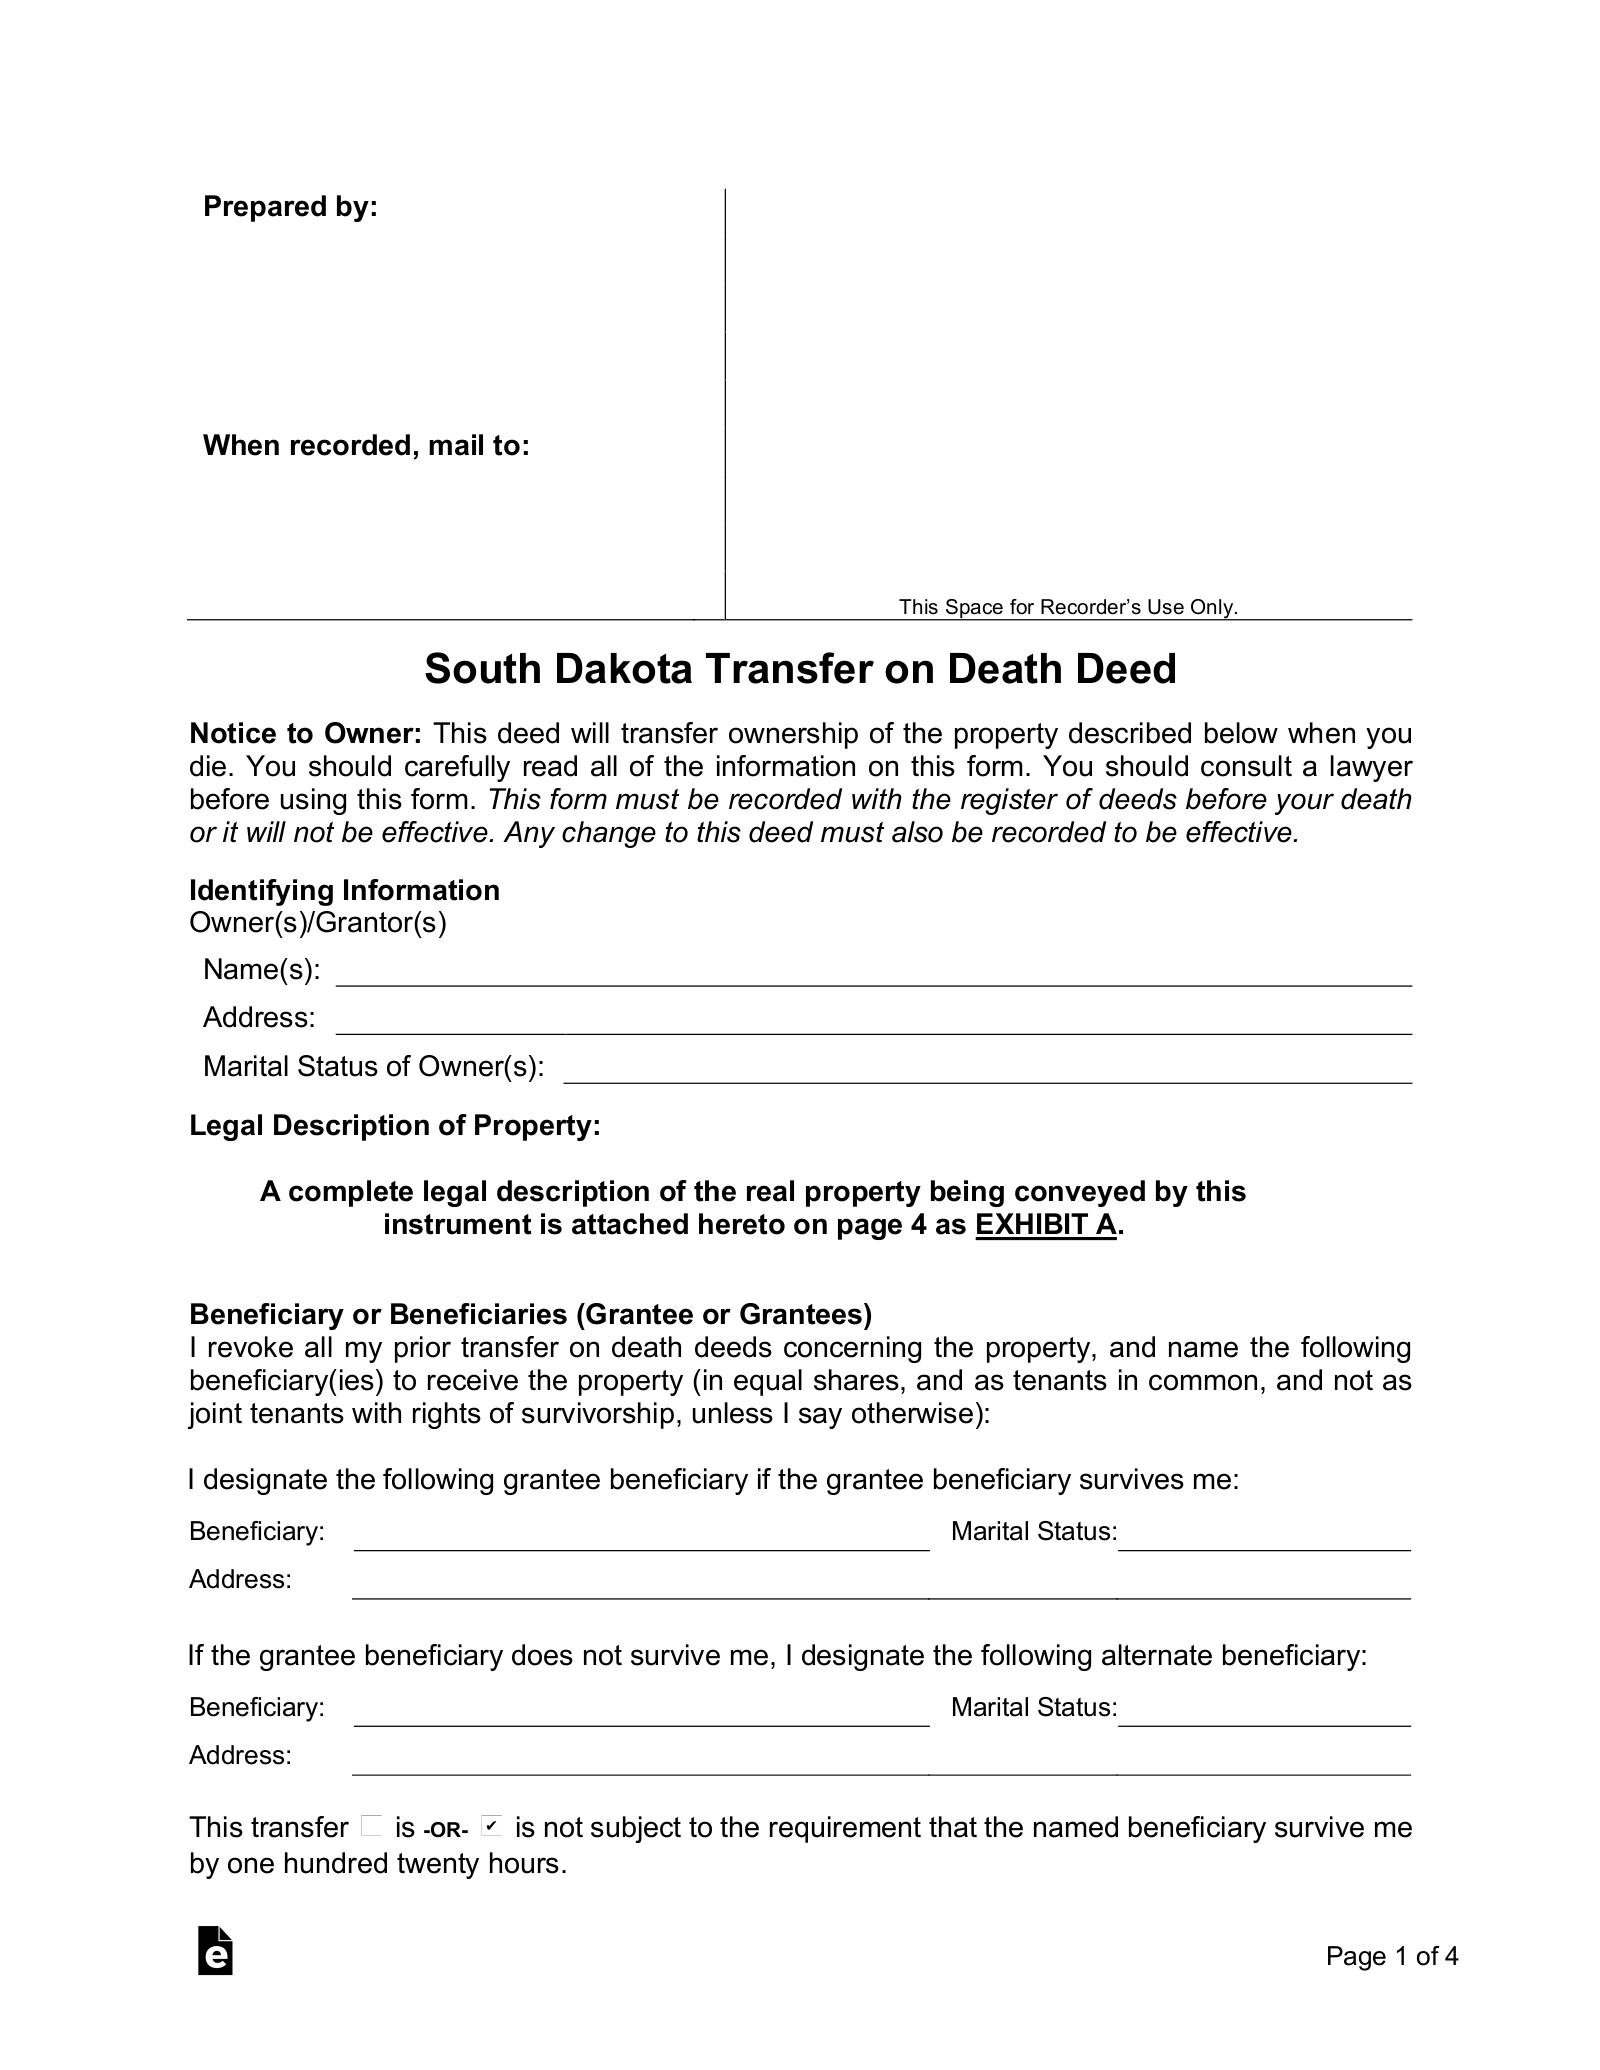 South Dakota Transfer on Death Deed